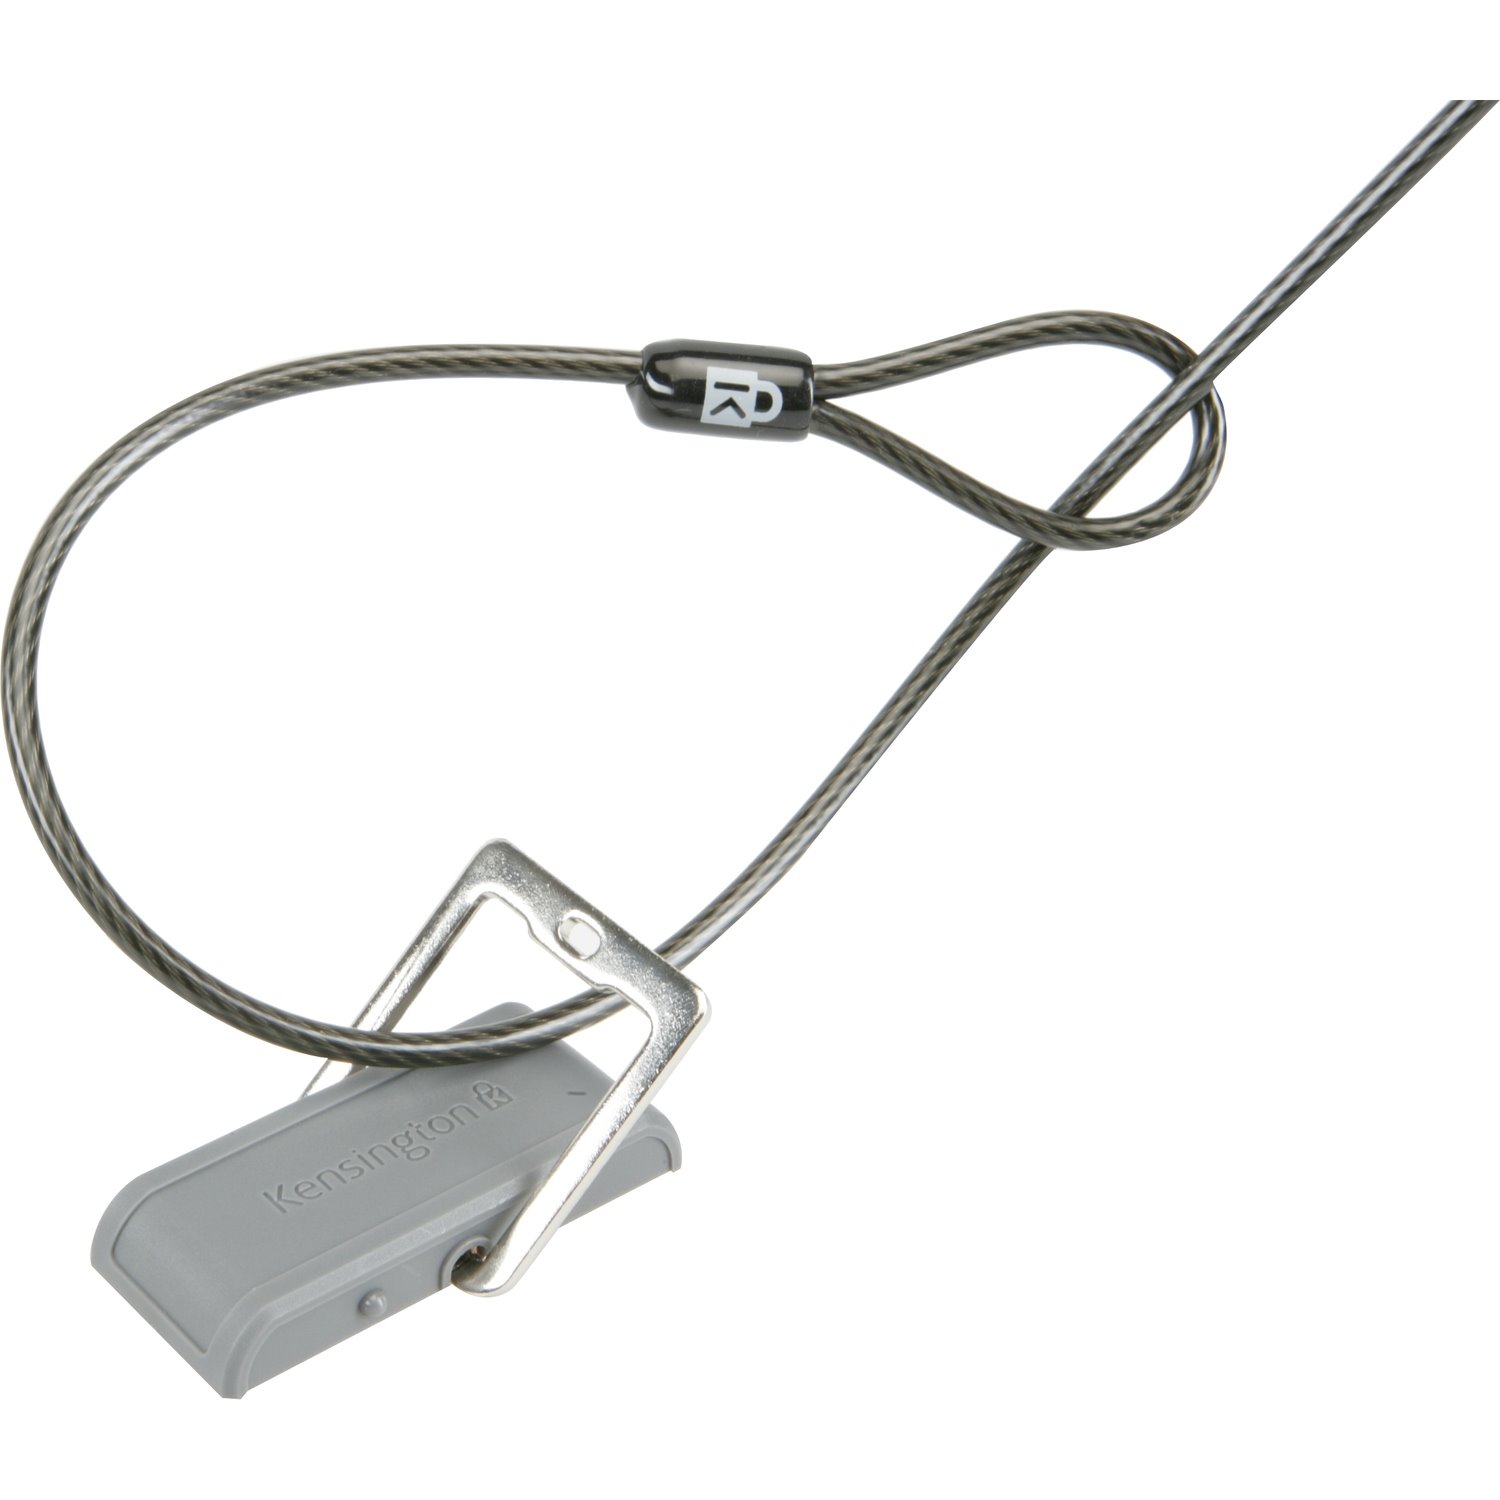 Kensington Cable Anchor - Grey - 1 Pack